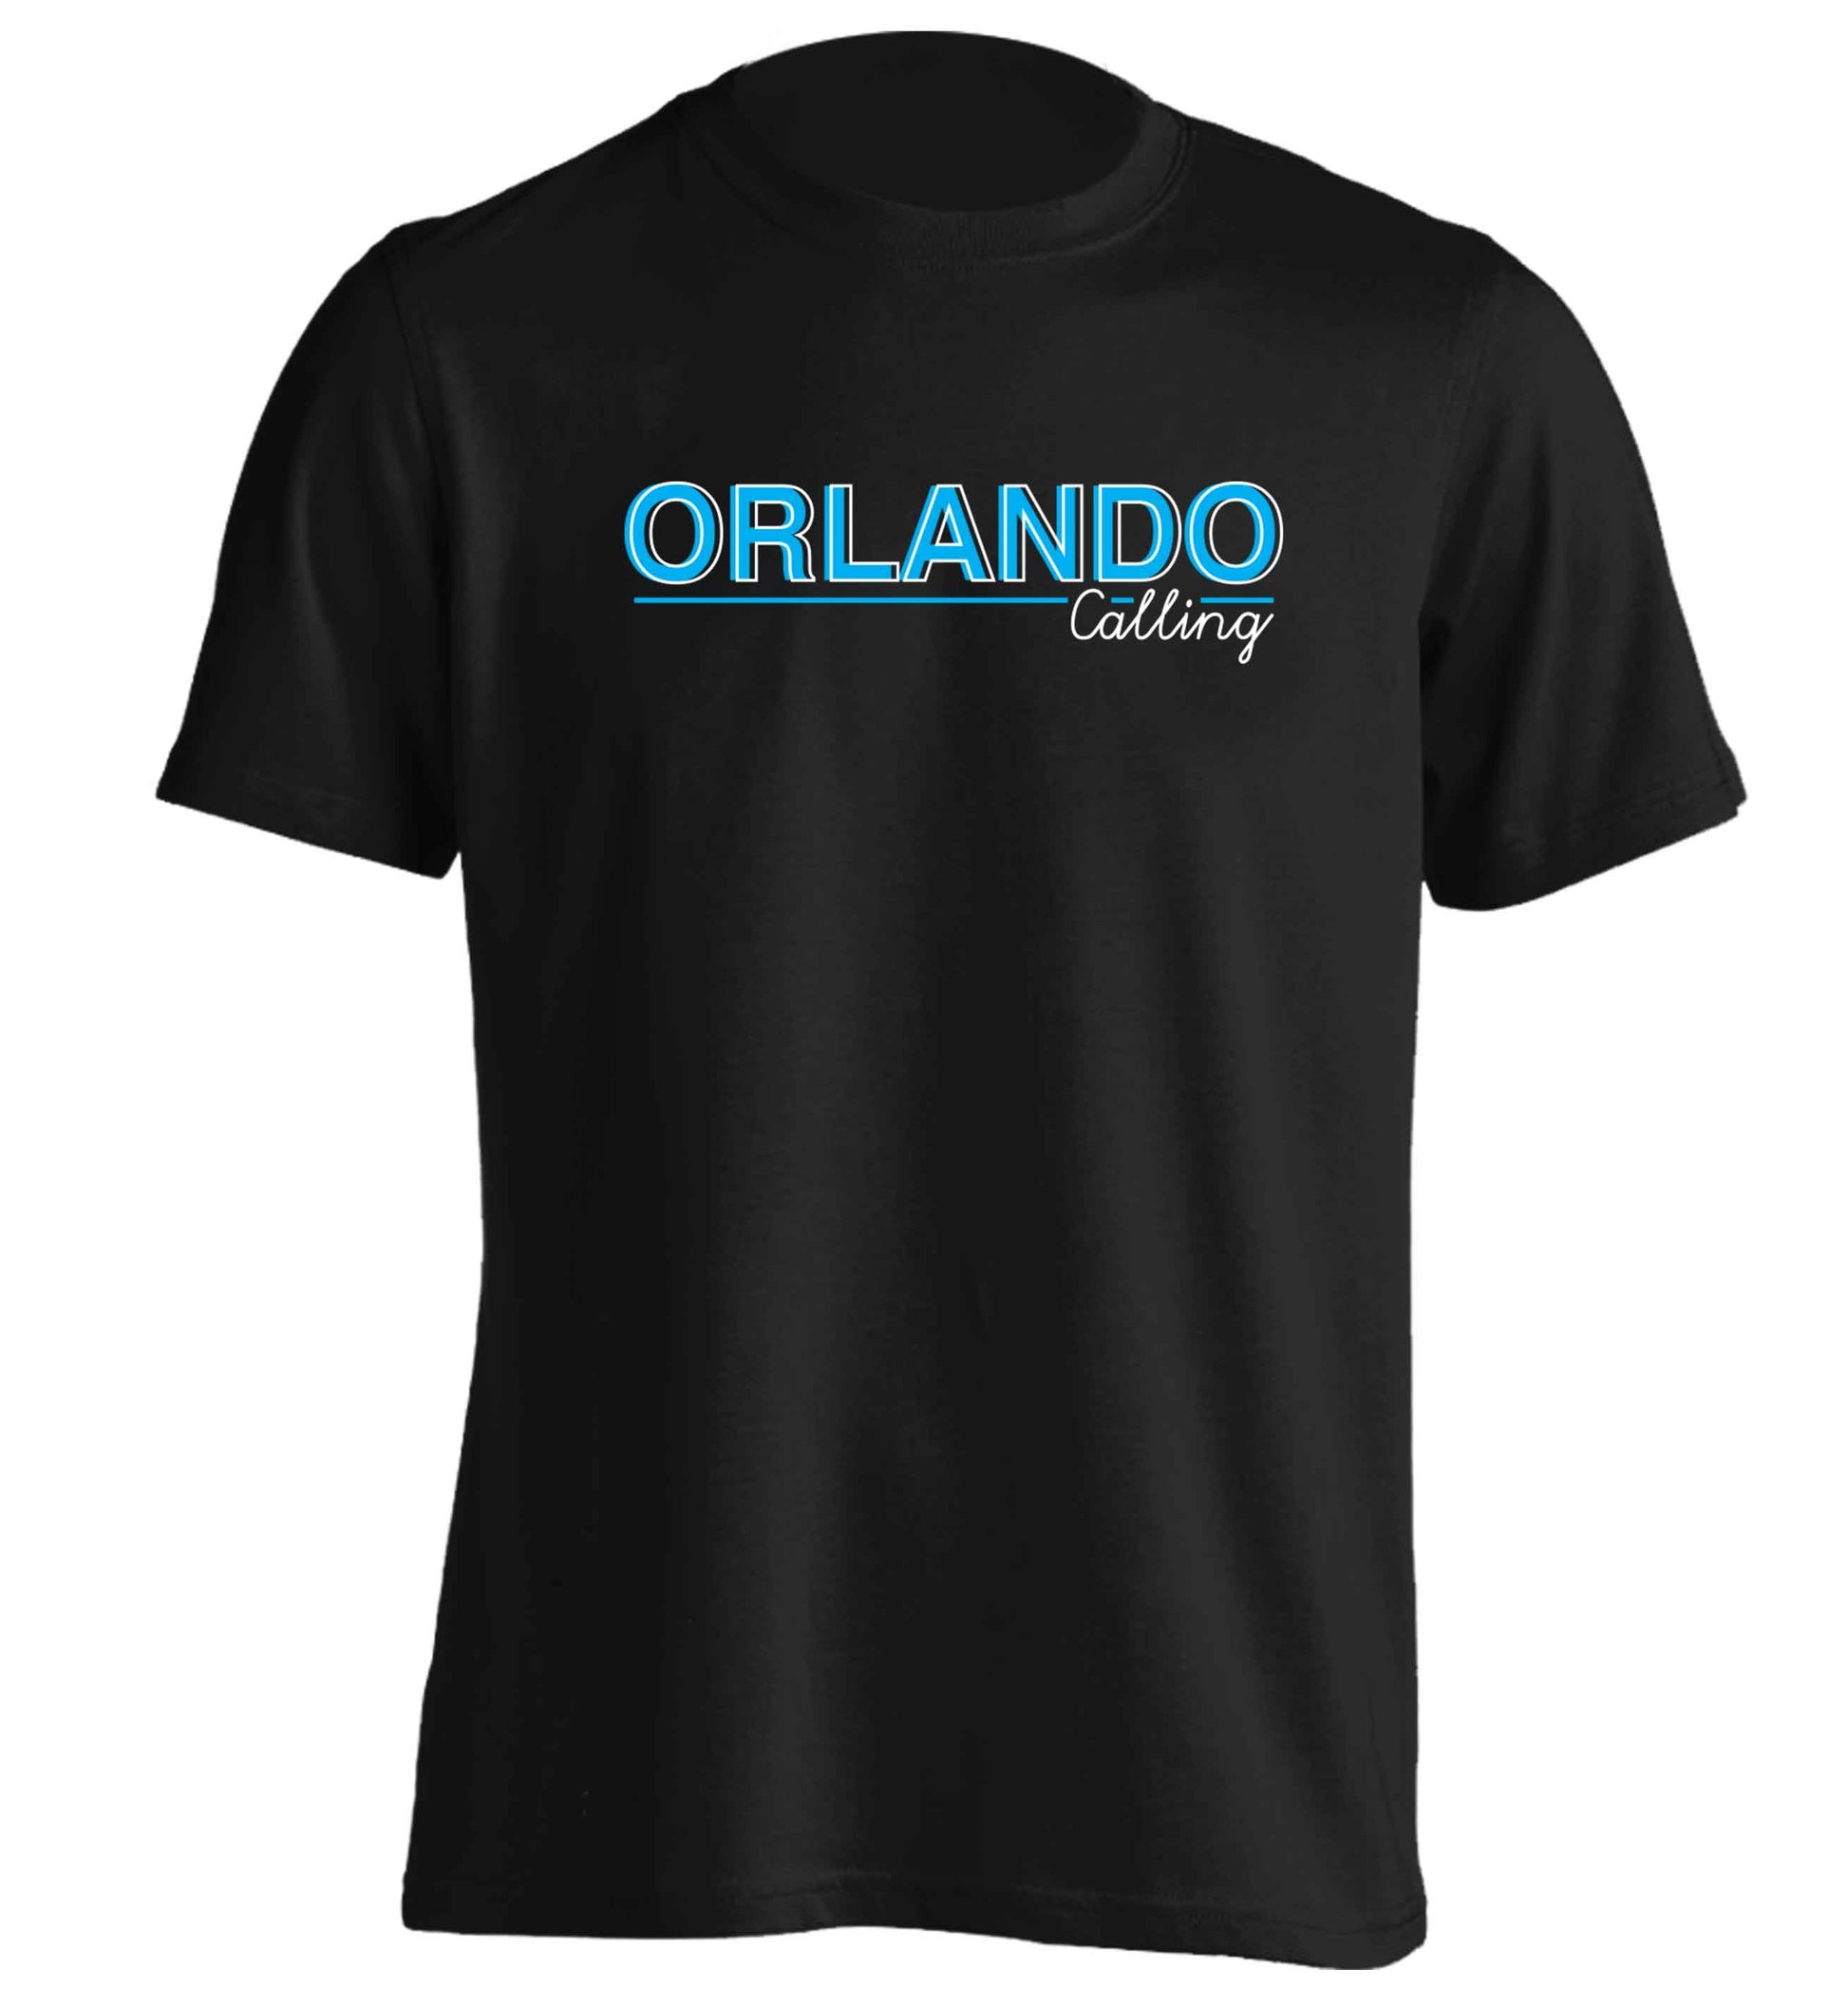 Orlando calling adults unisex black Tshirt 2XL